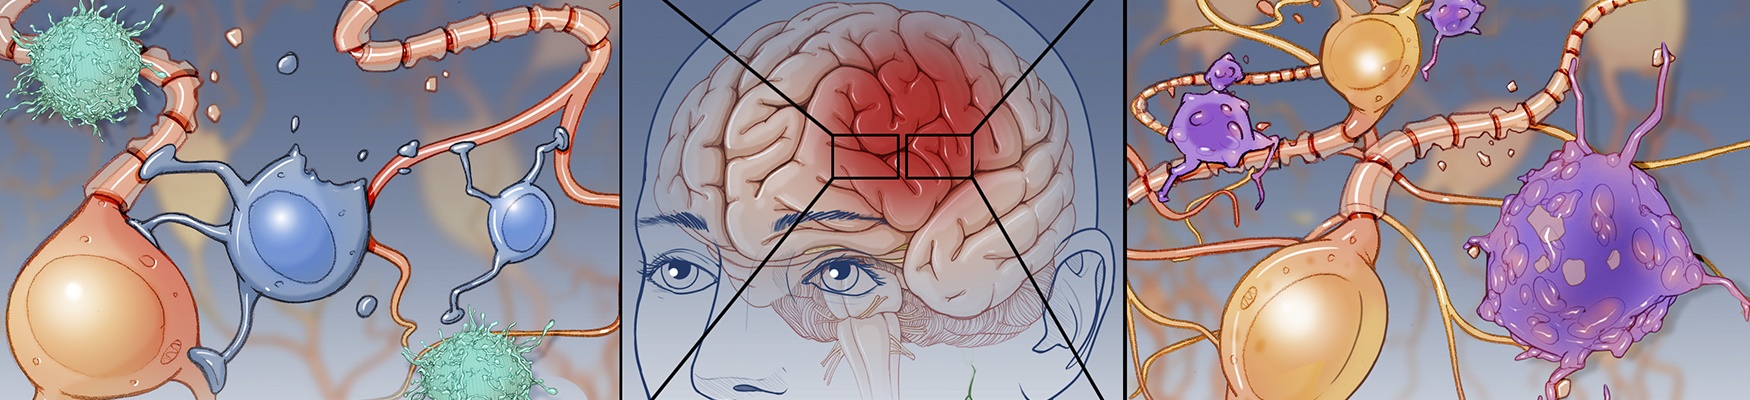 neurosurgery research promo image